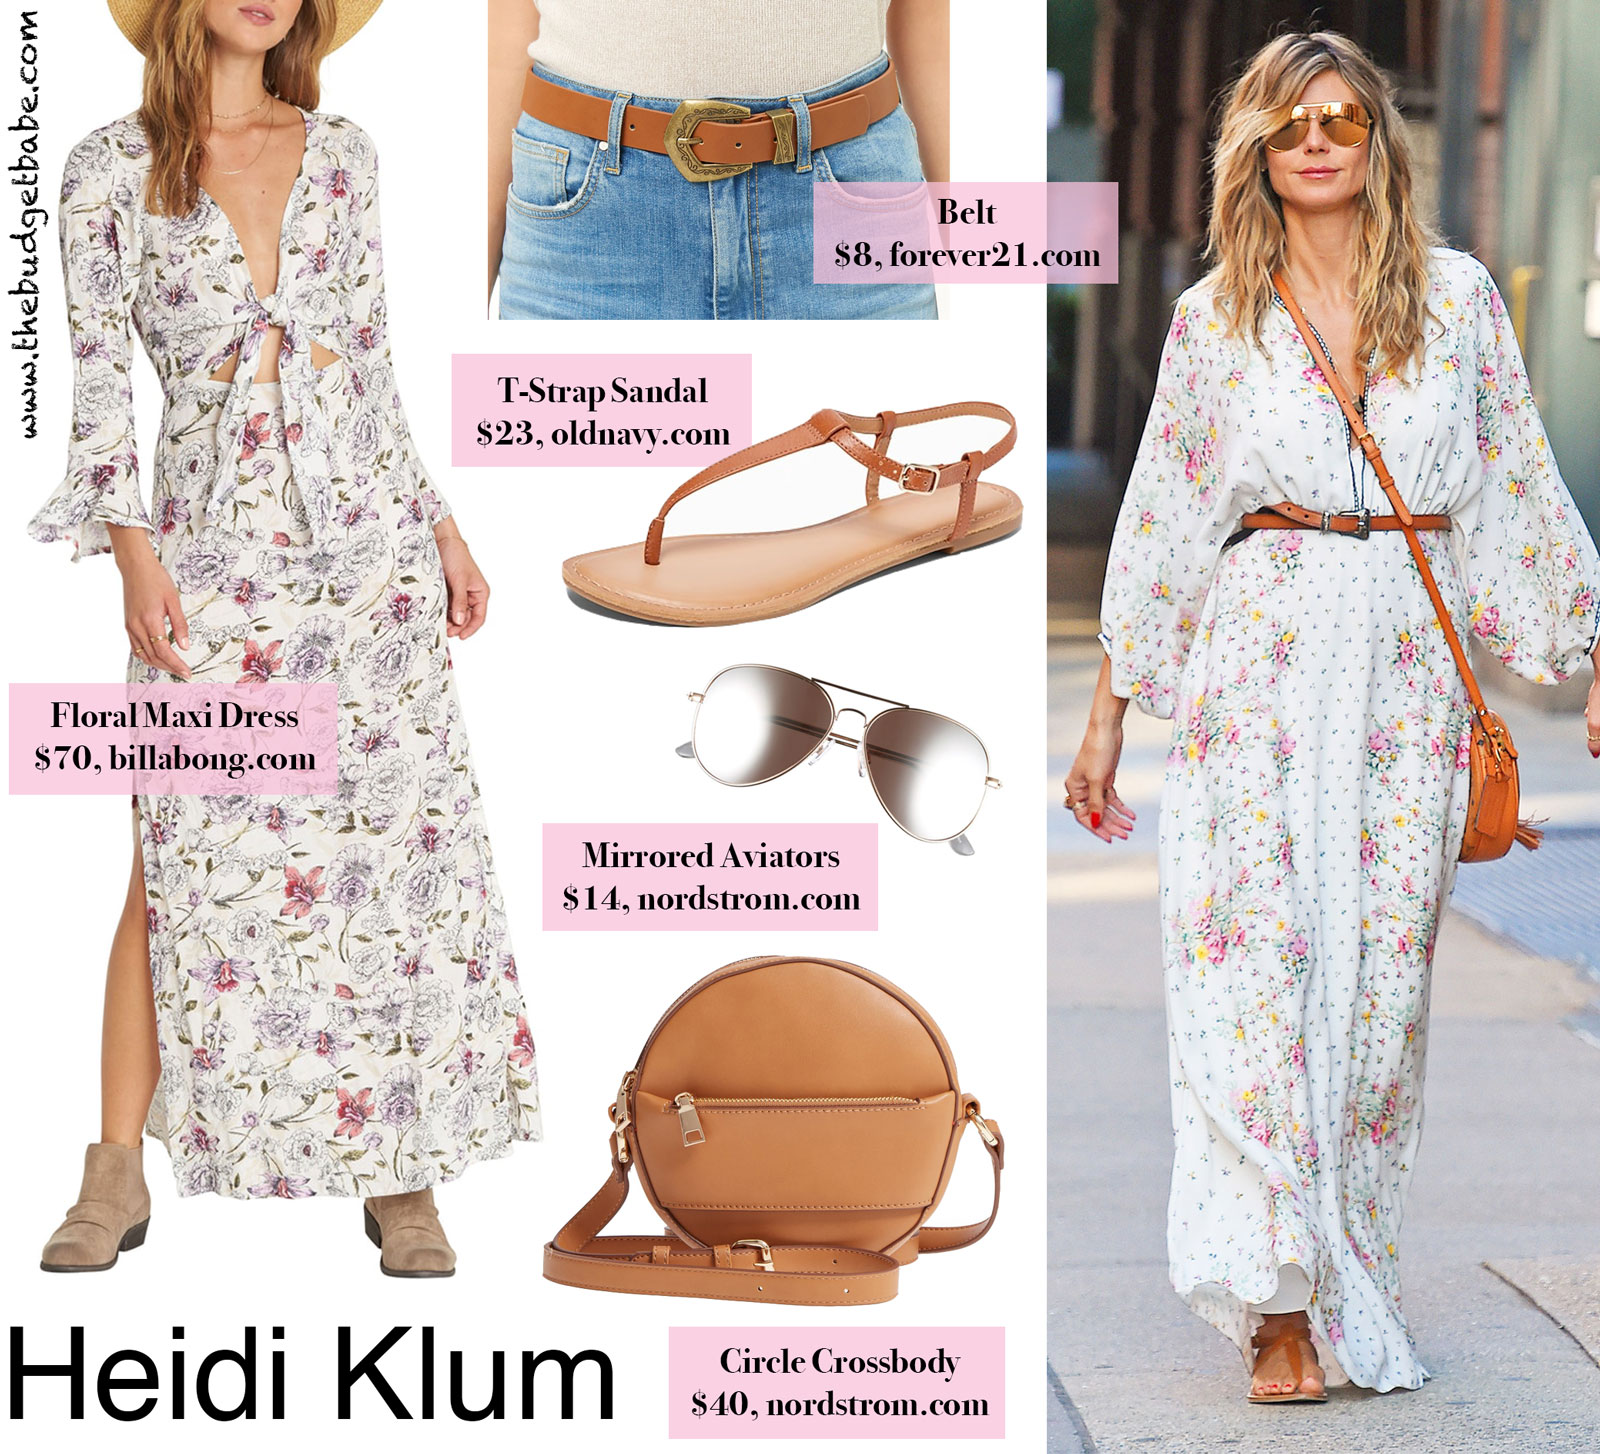 Heidi Klum White Floral Maxi Dress Look for Less